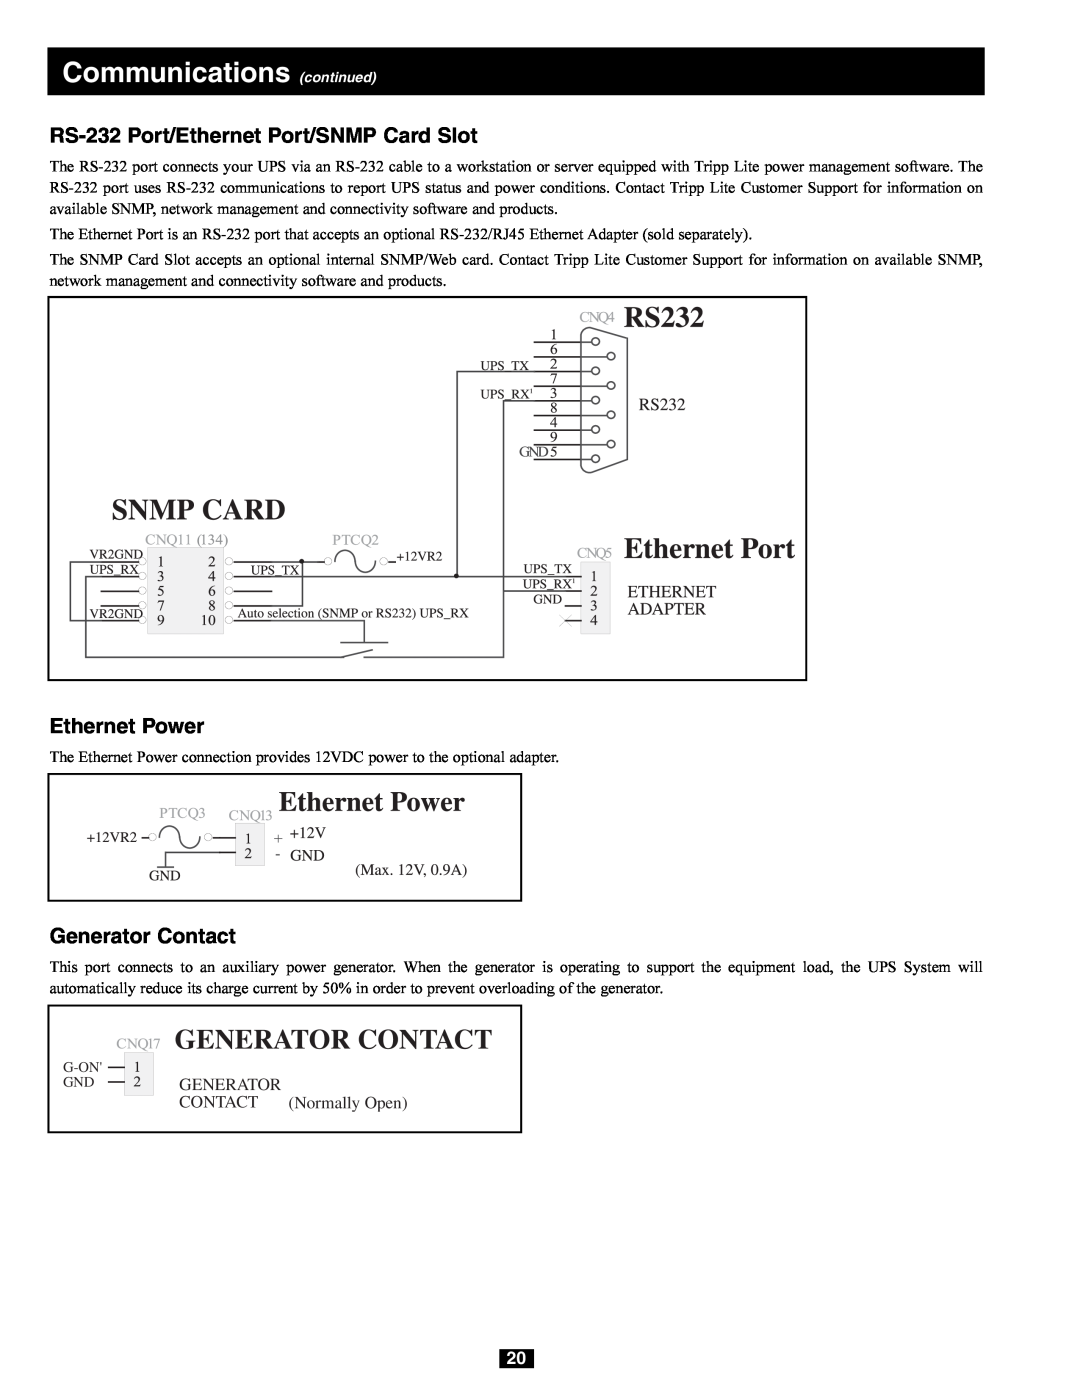 Tripp Lite 240/415V AC, 230/400V, 277/480V AC Generator Contact, RS-232 Port/Ethernet Port/SNMP Card Slot, Ethernet Power 